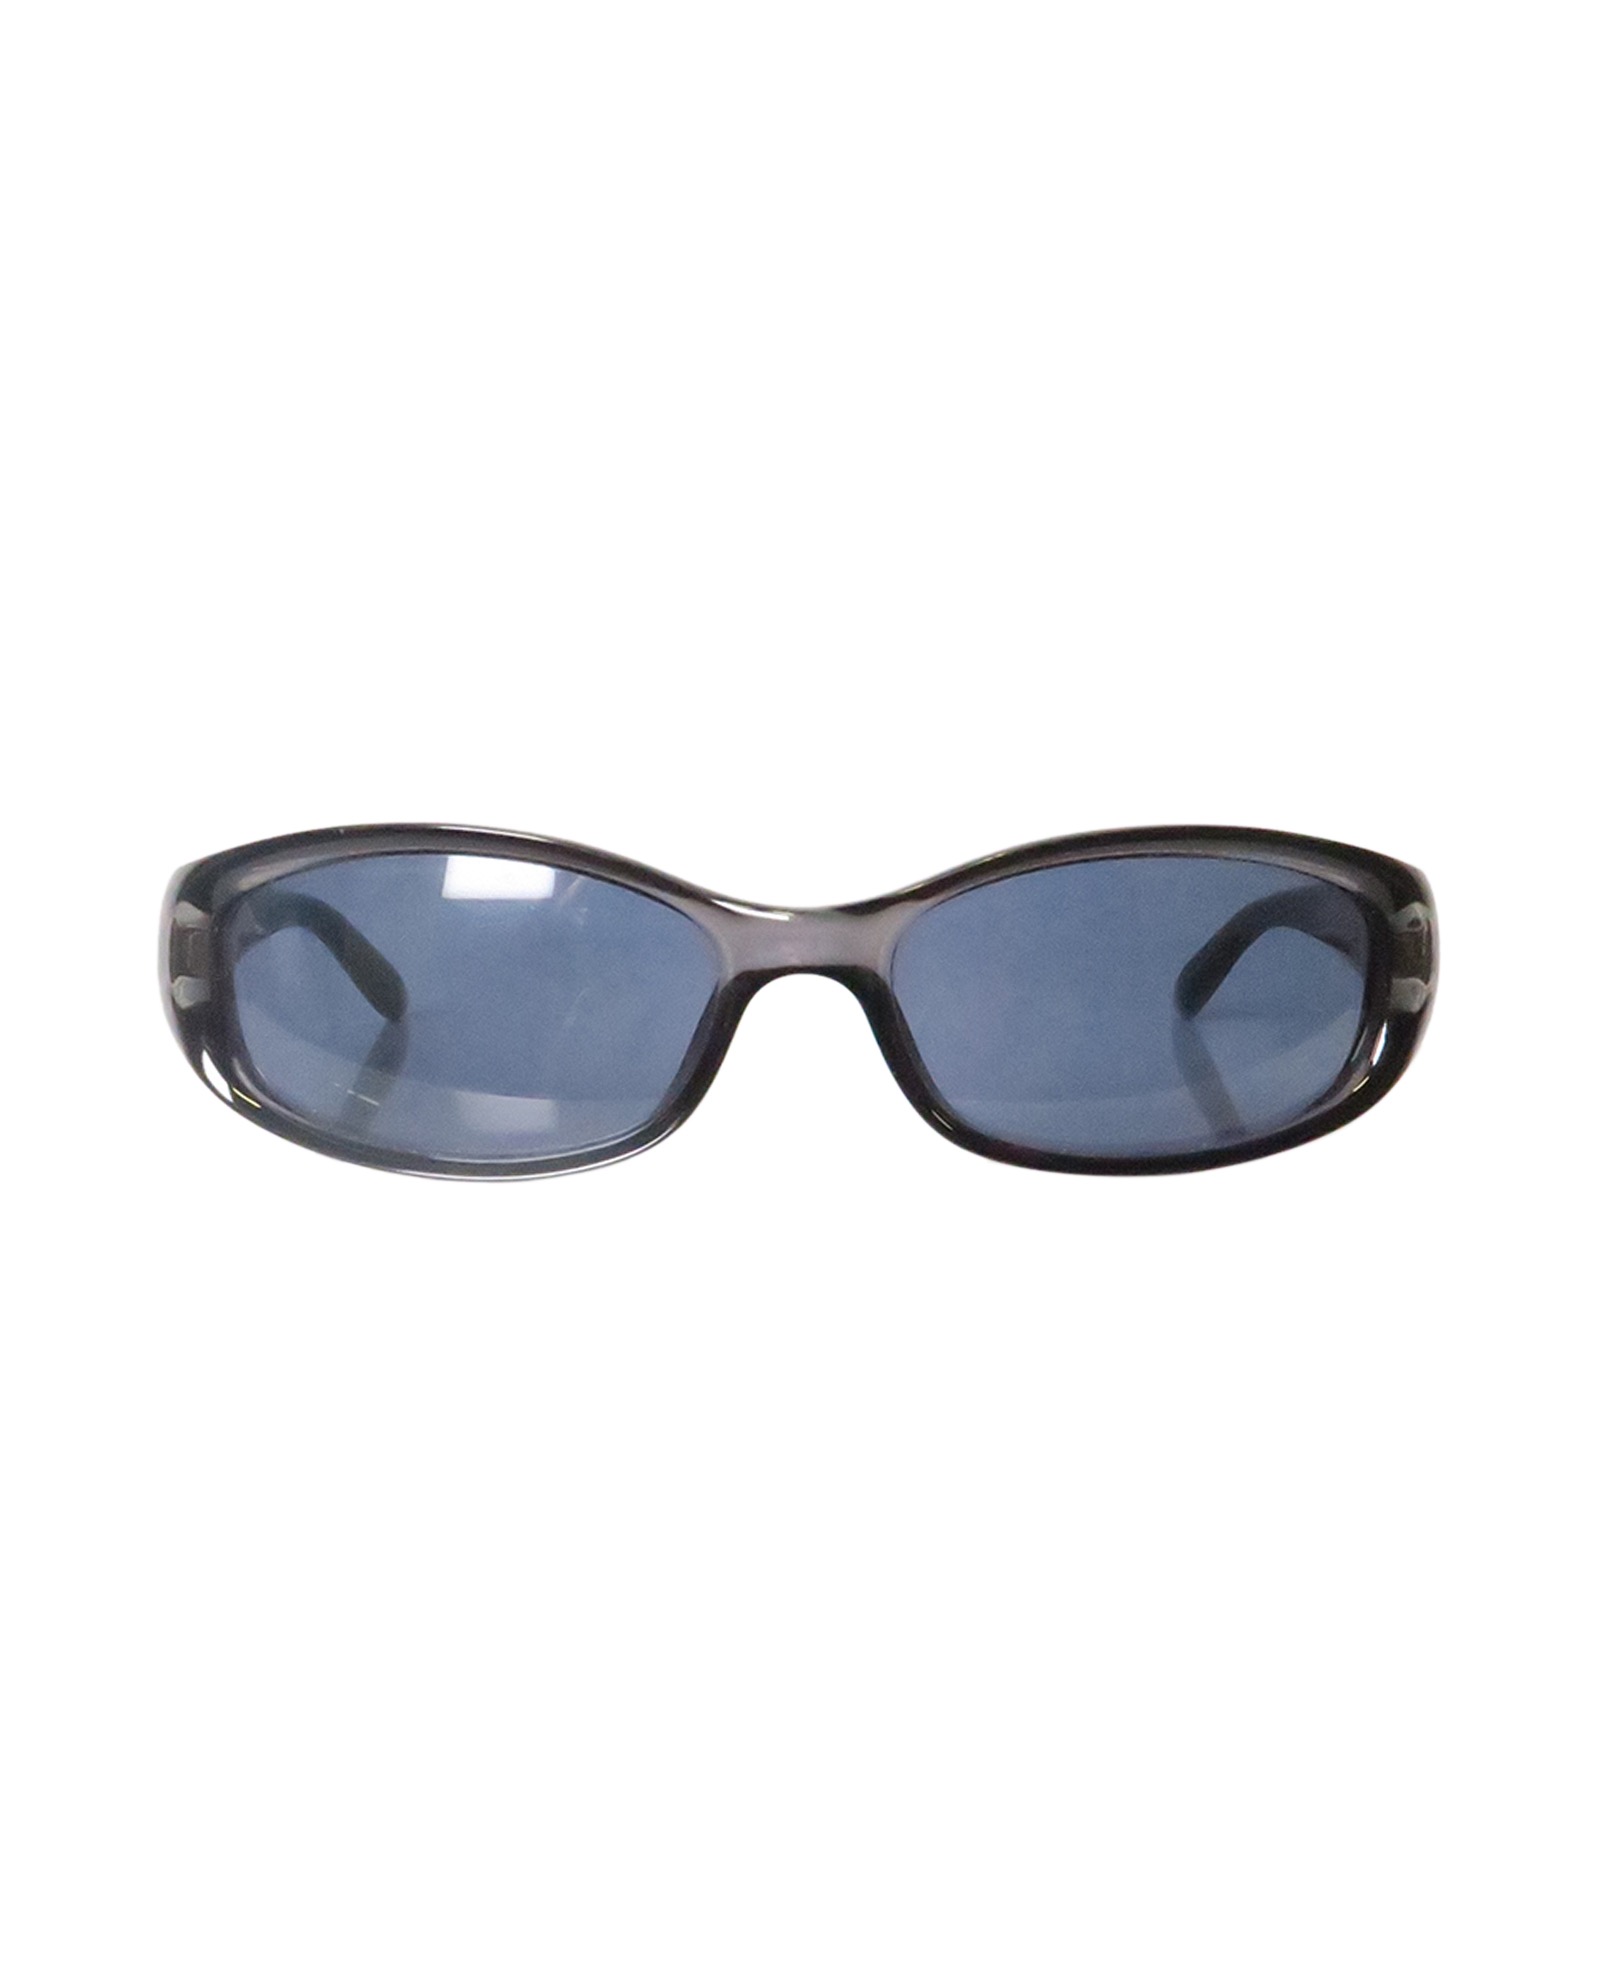 Gucci GG 2456/S Sunglasses, Sunglasses - Designer Exchange | Buy Sell ...